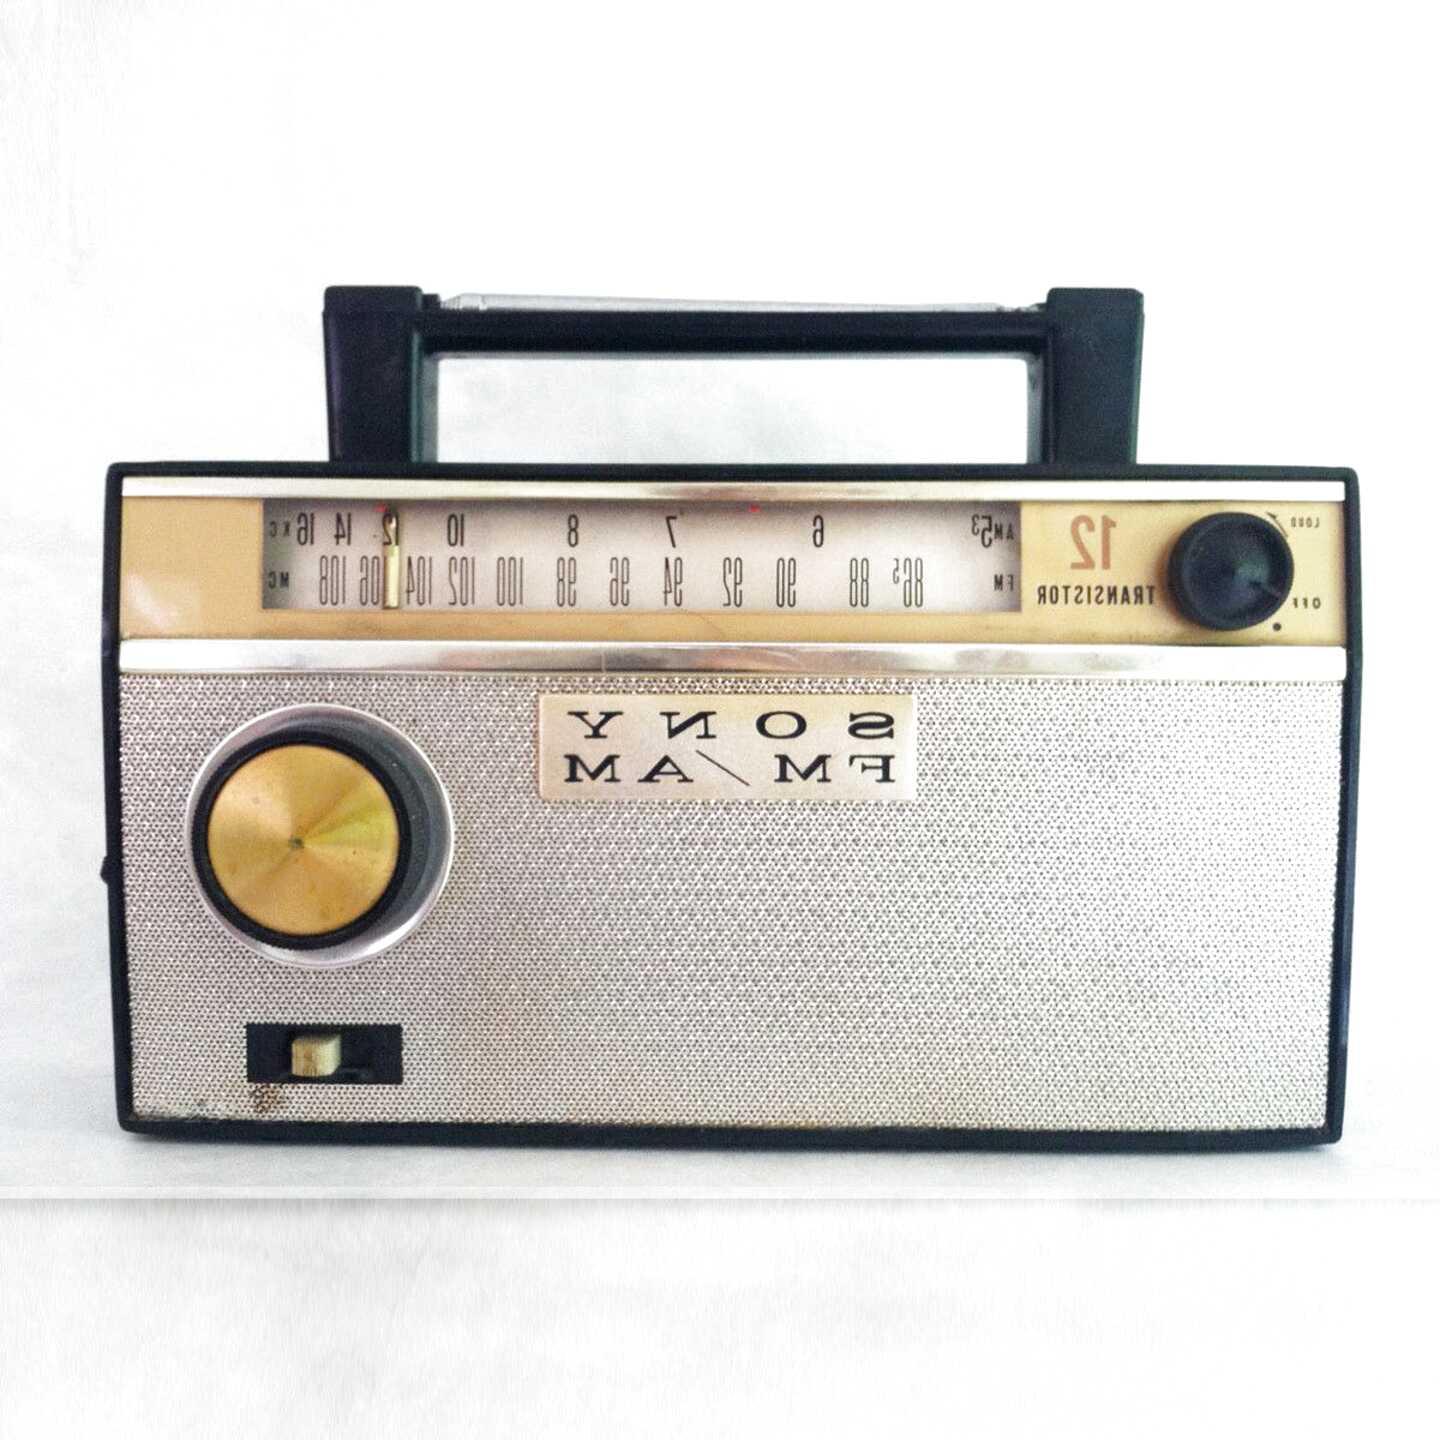 sony transistor radio